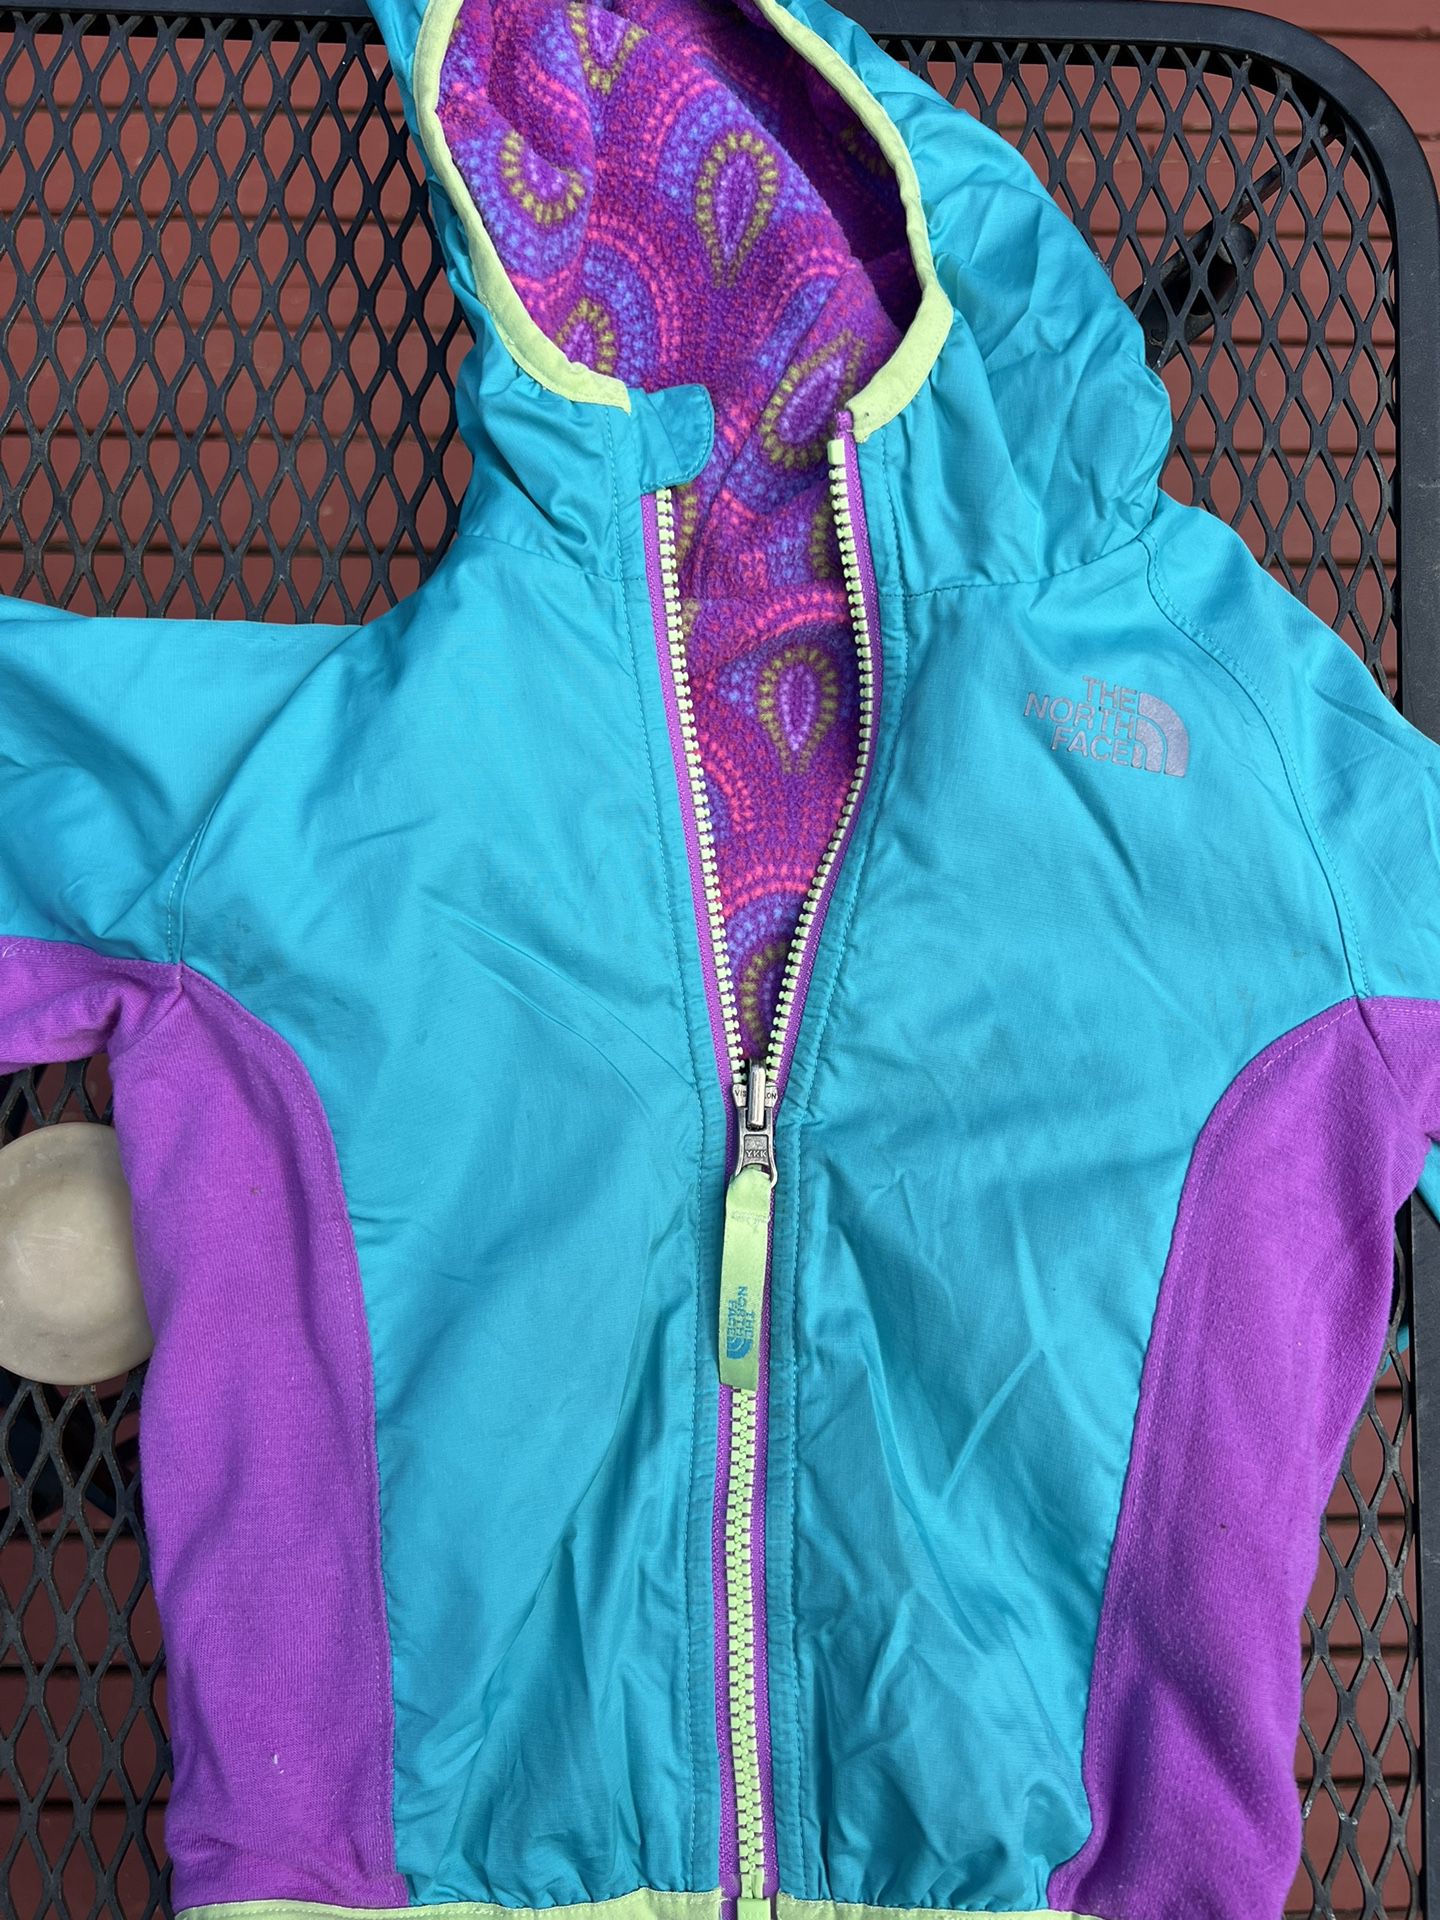 North Face Girls Rain jacket - Size 18mo